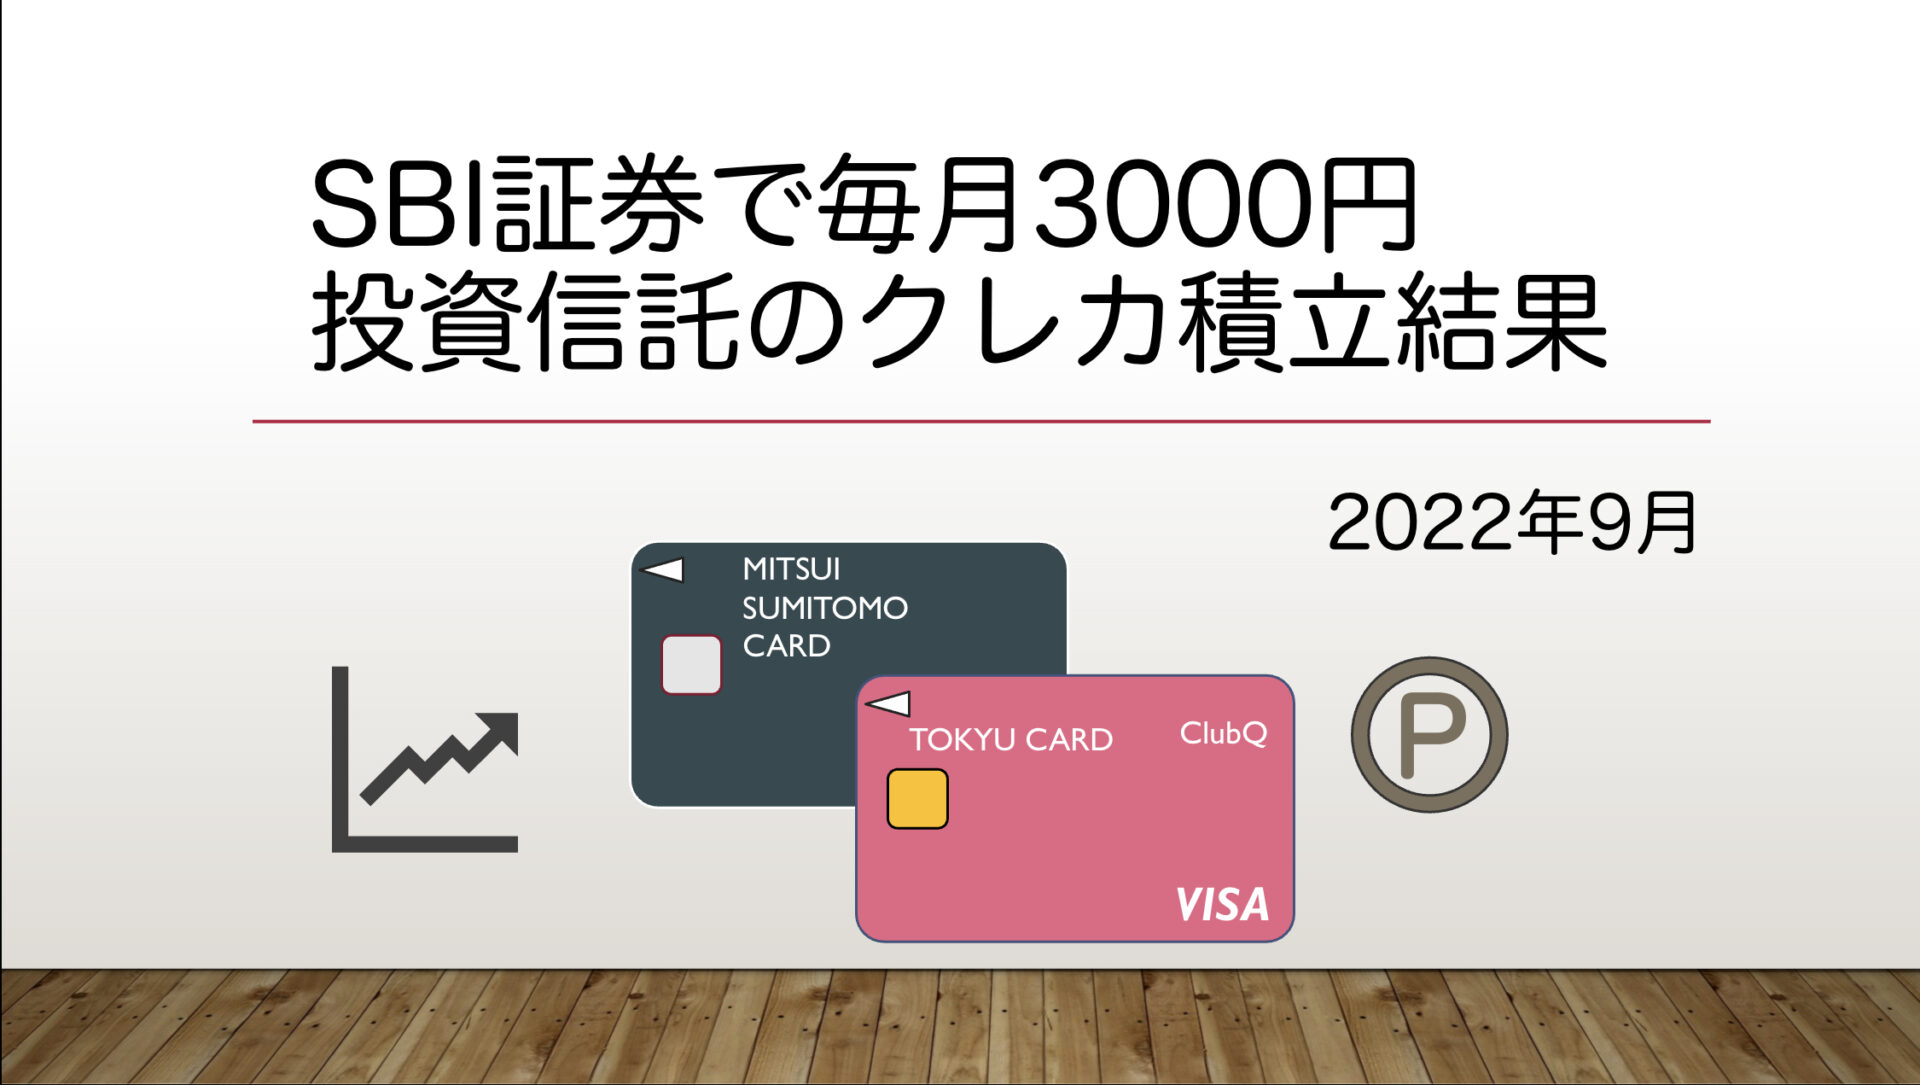 【SBI証券】三井住友カードによる投資信託のクレカ積立結果【2022年9月】